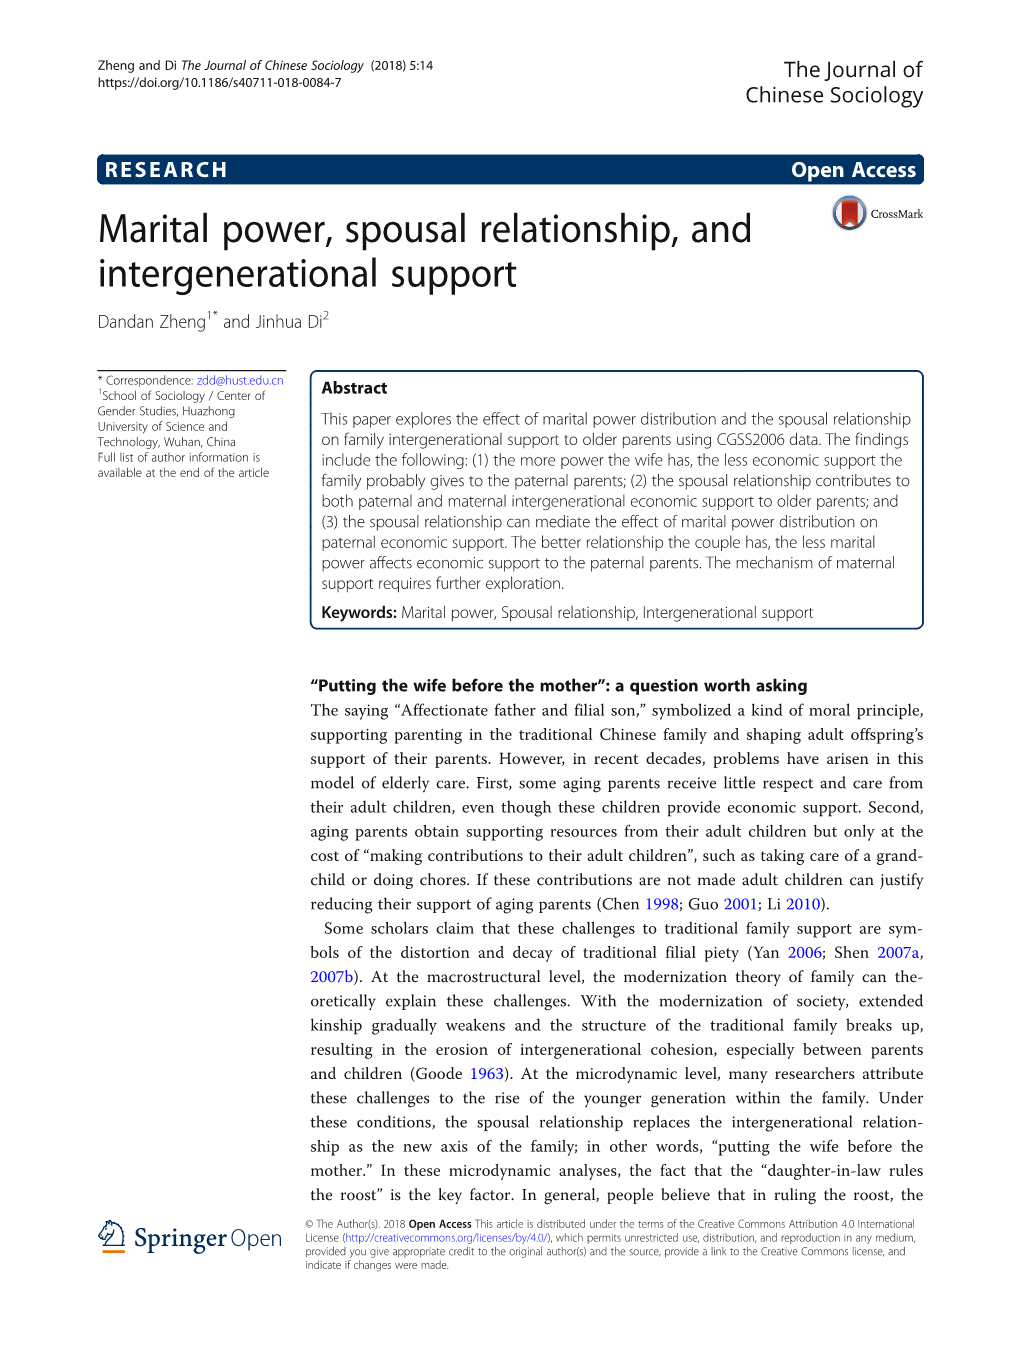 Marital Power, Spousal Relationship, and Intergenerational Support Dandan Zheng1* and Jinhua Di2